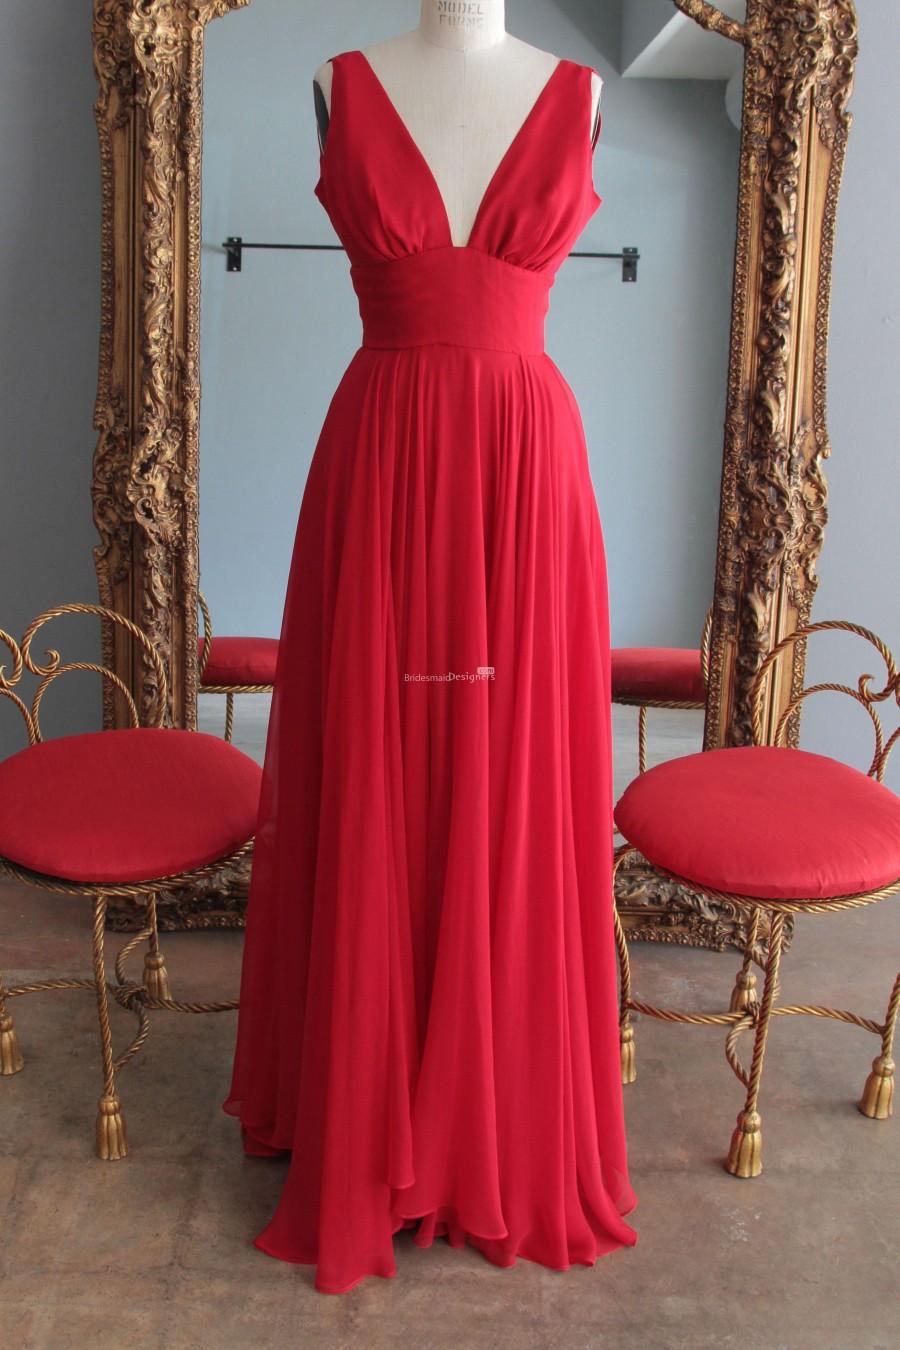 Mariage - Red Dress for Bridesmaid - BridesmaidDesigners